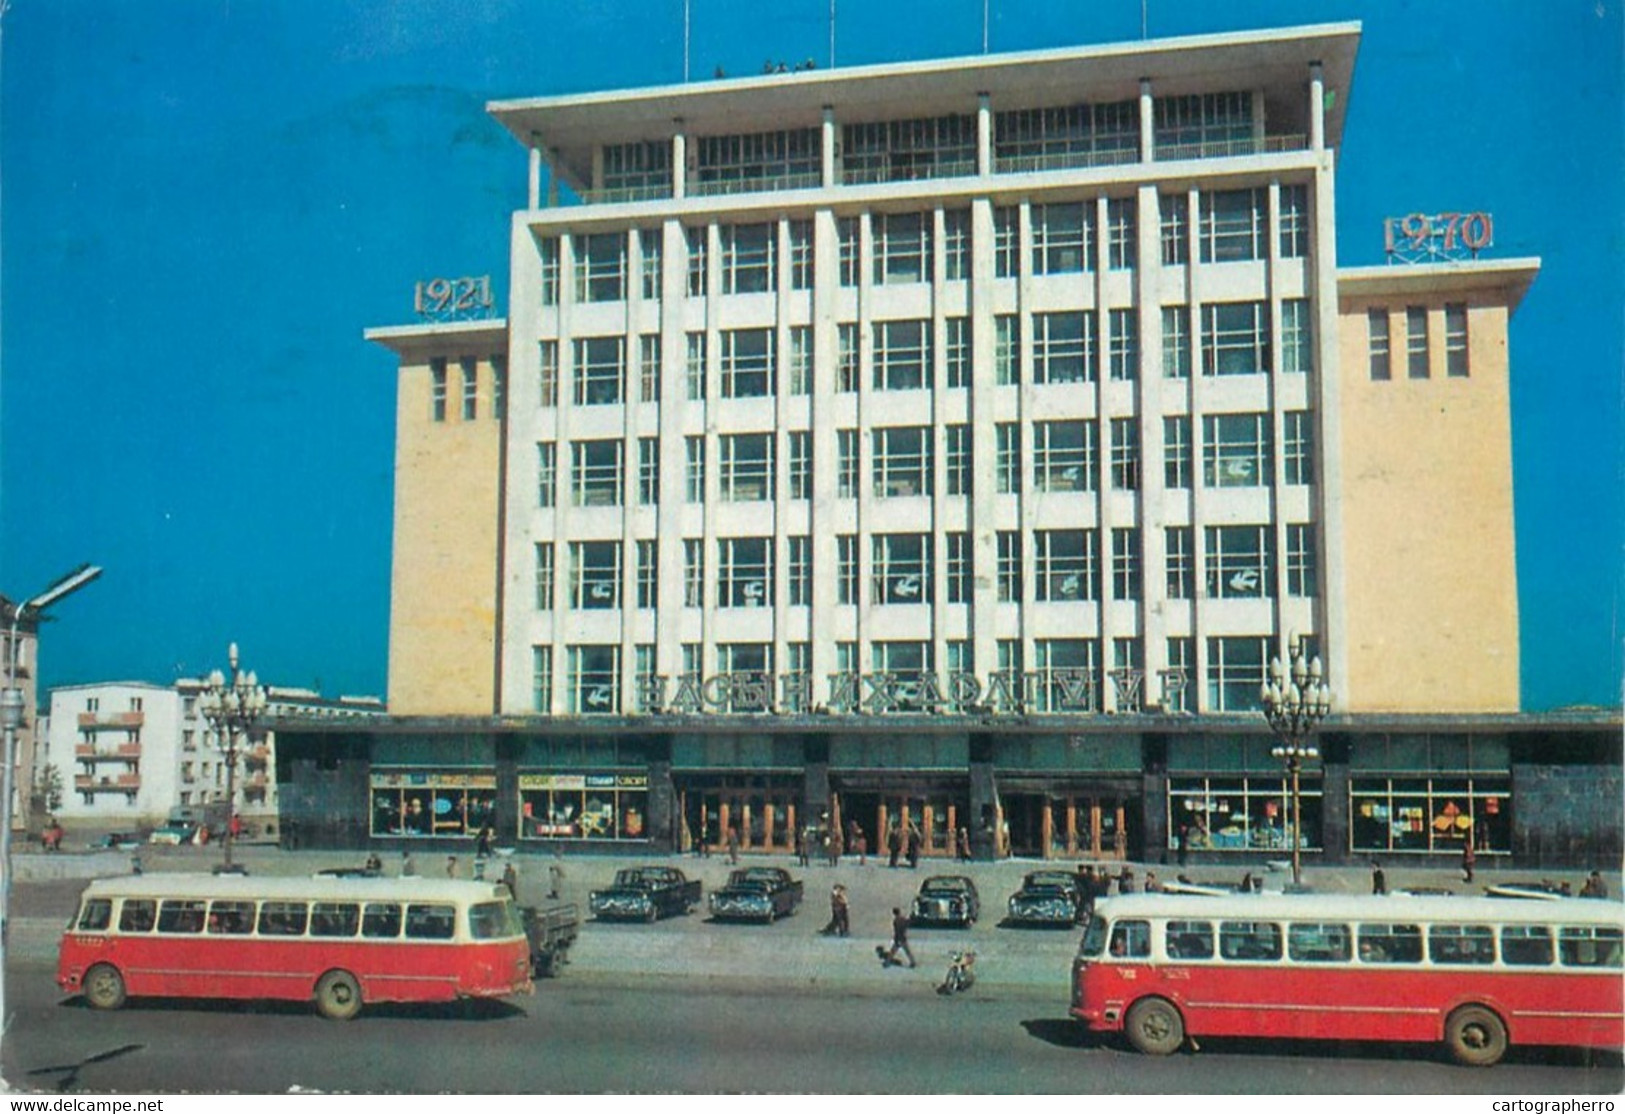 Postcard Mongolia Ulan Bator The State Department Store Buses - Mongolia